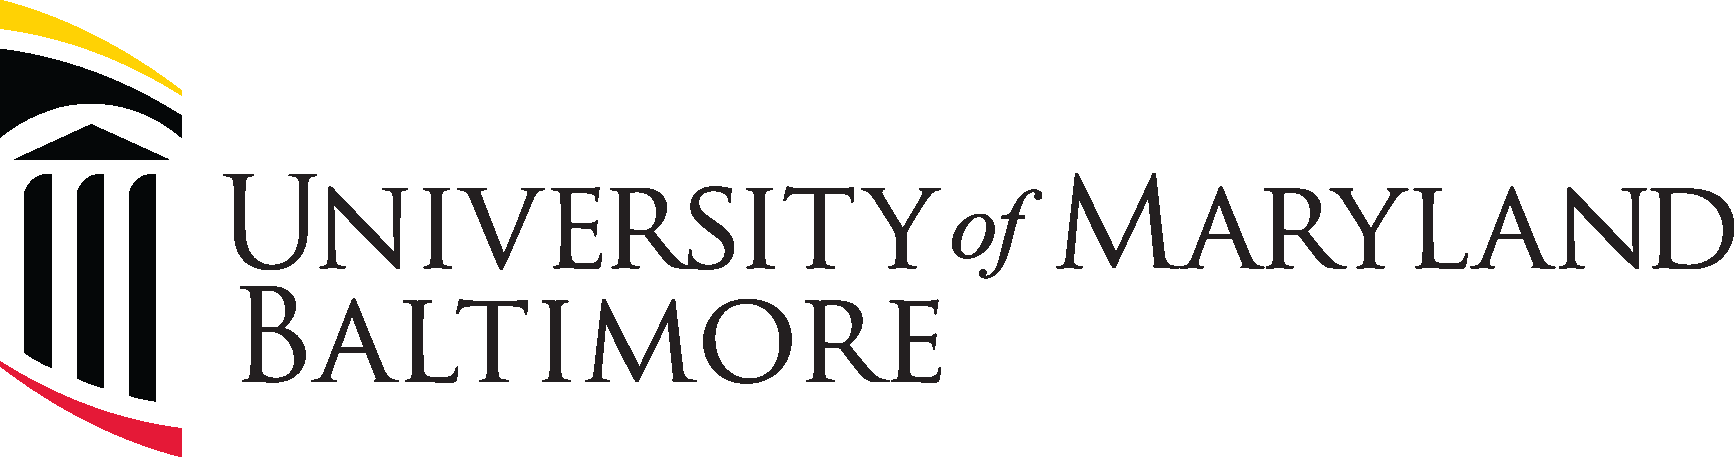 UMB-logo horizontal.png